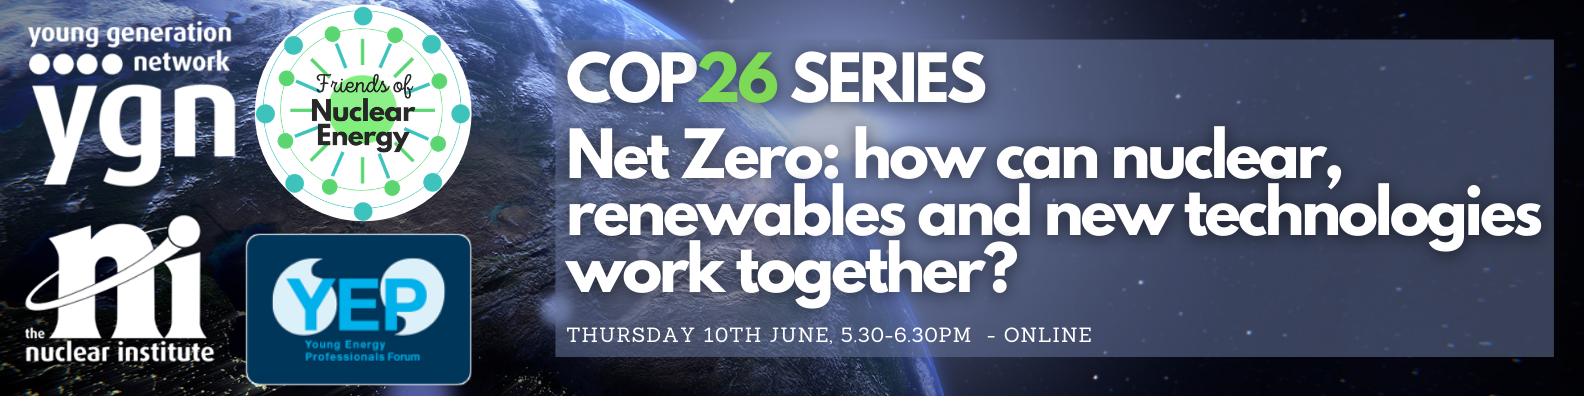 COP26 Series event 1 banner 